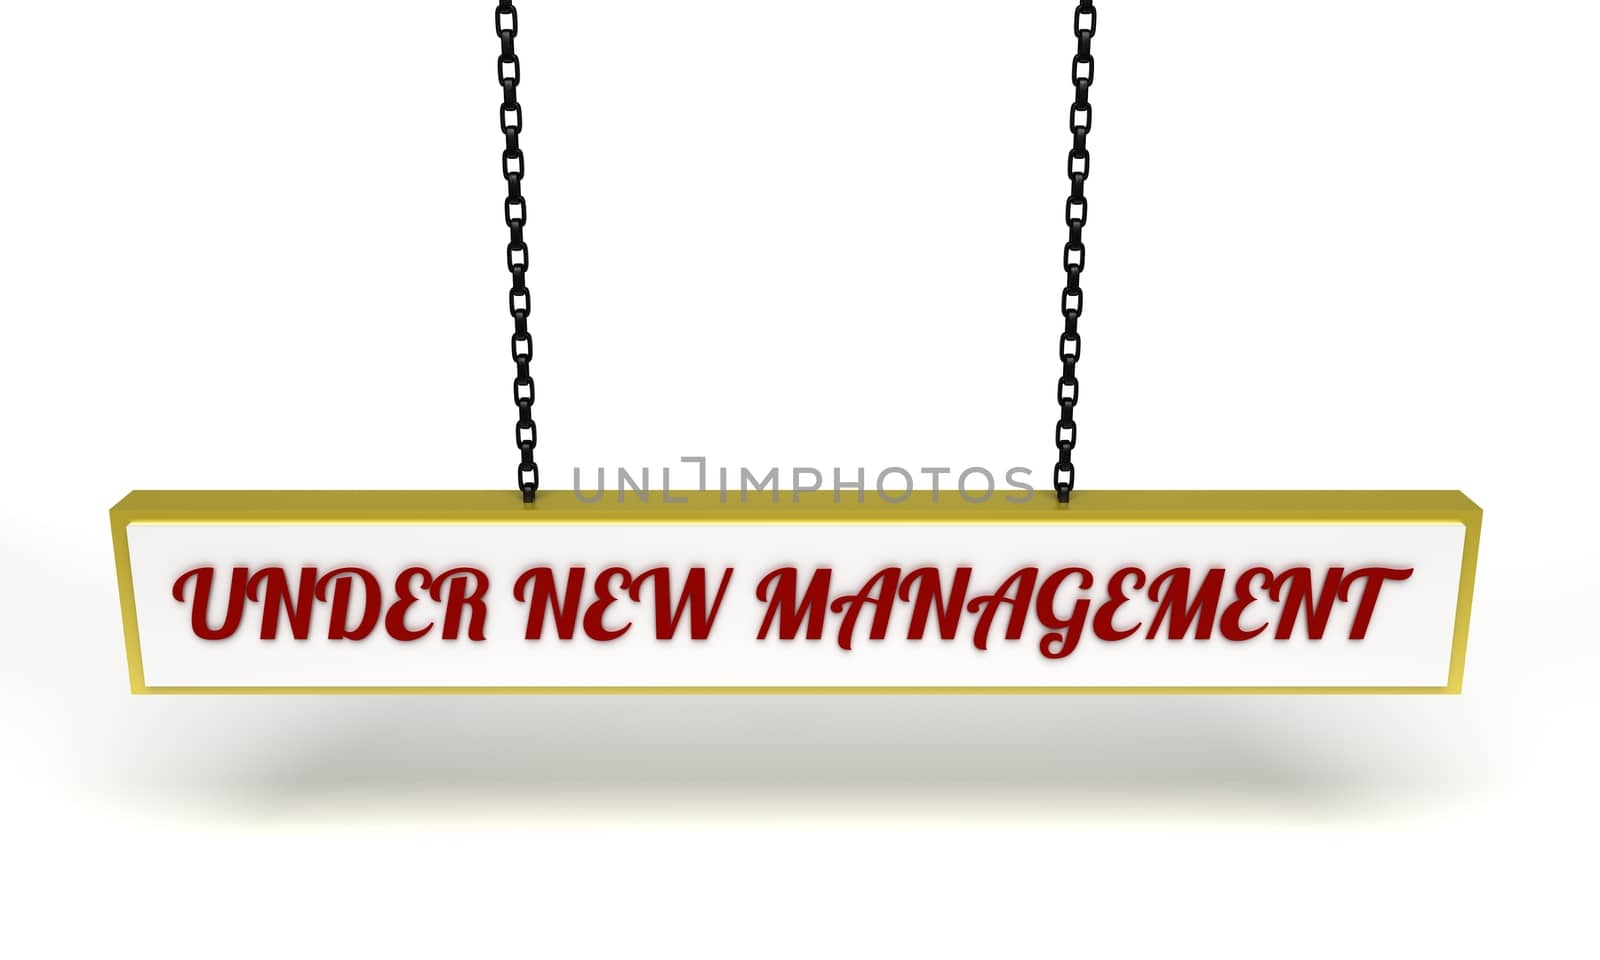 Under New Management by darrenwhittingham